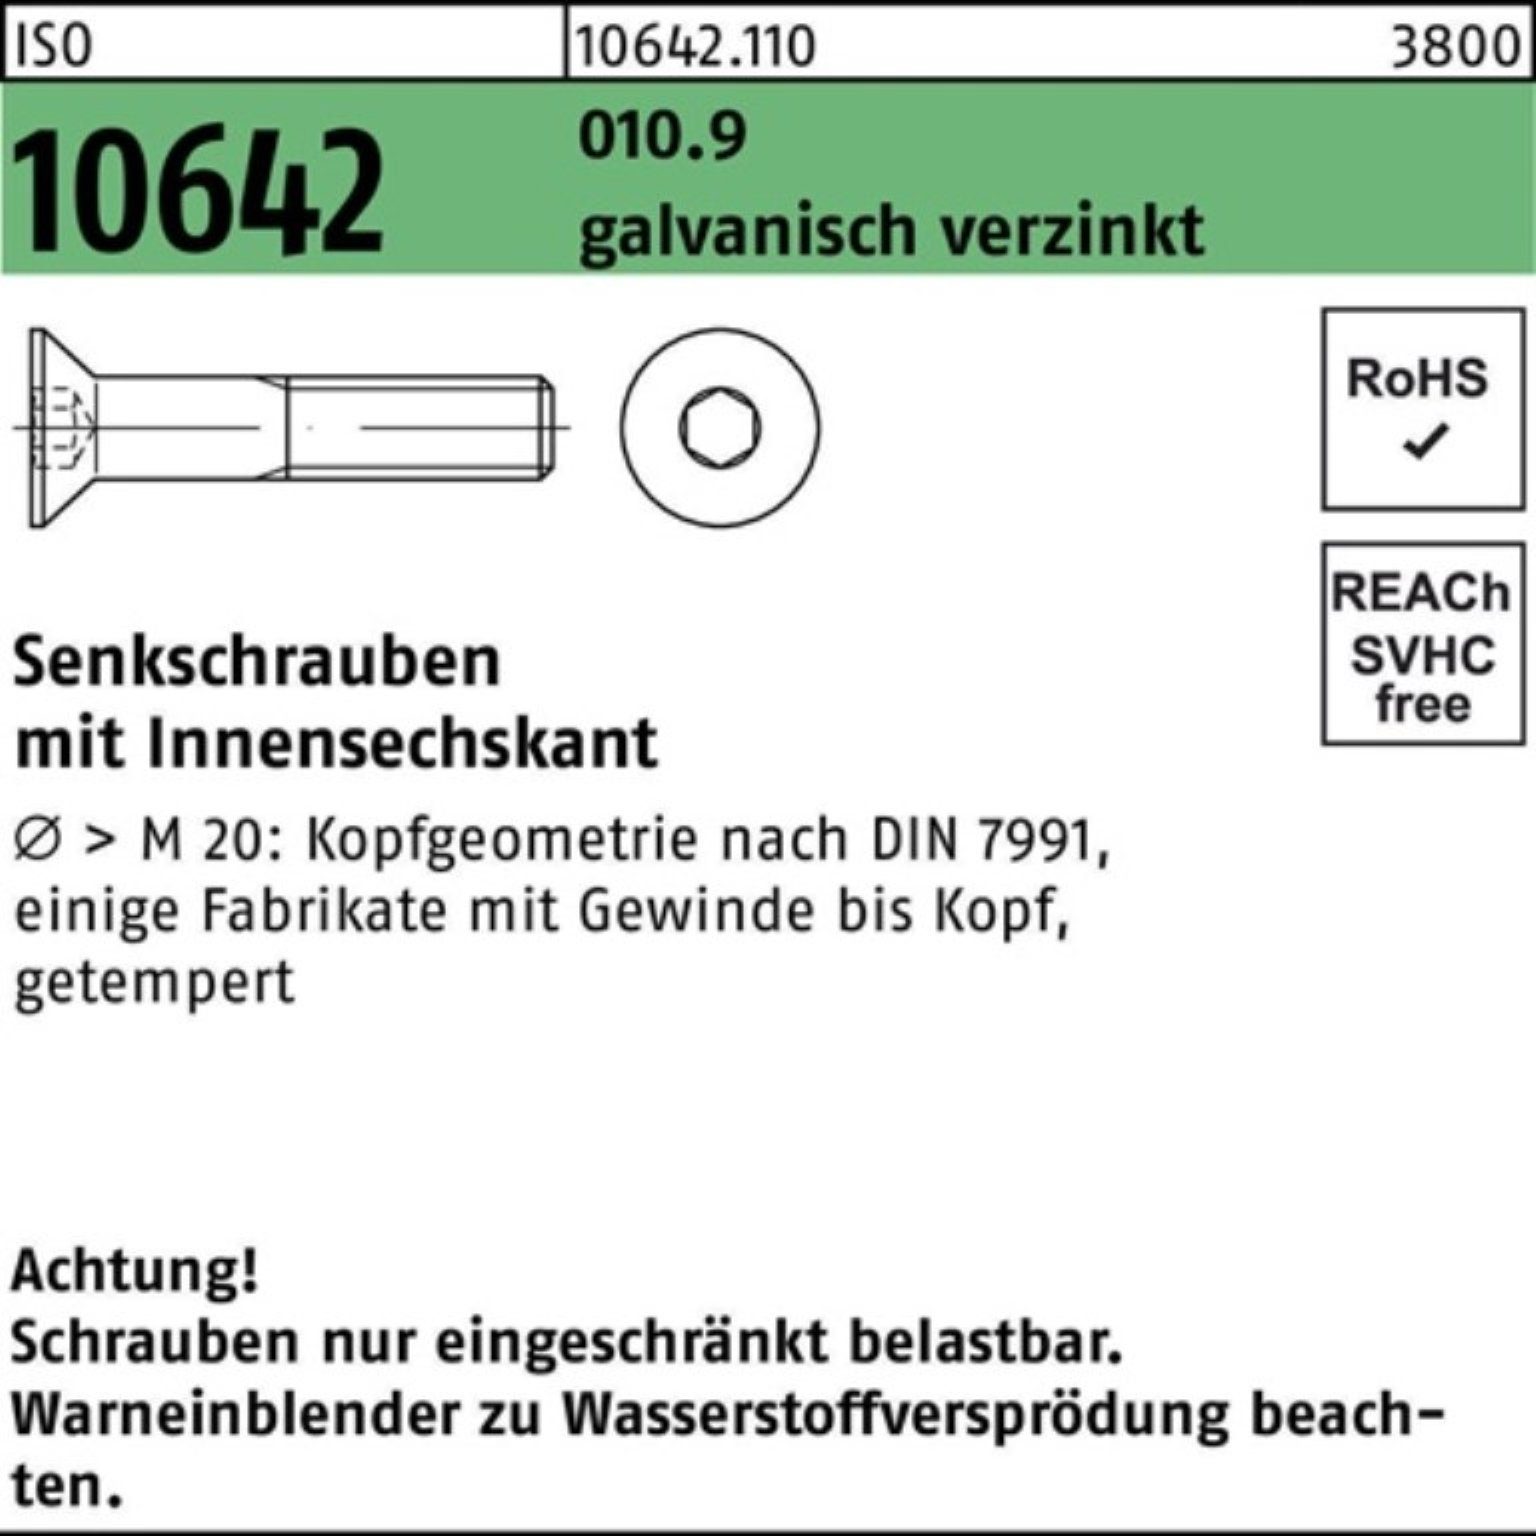 Reyher Senkschraube 500er Pack Senkschraube ISO 10642 Innen-6kt M5x 10 010.9 galv.verz. 50